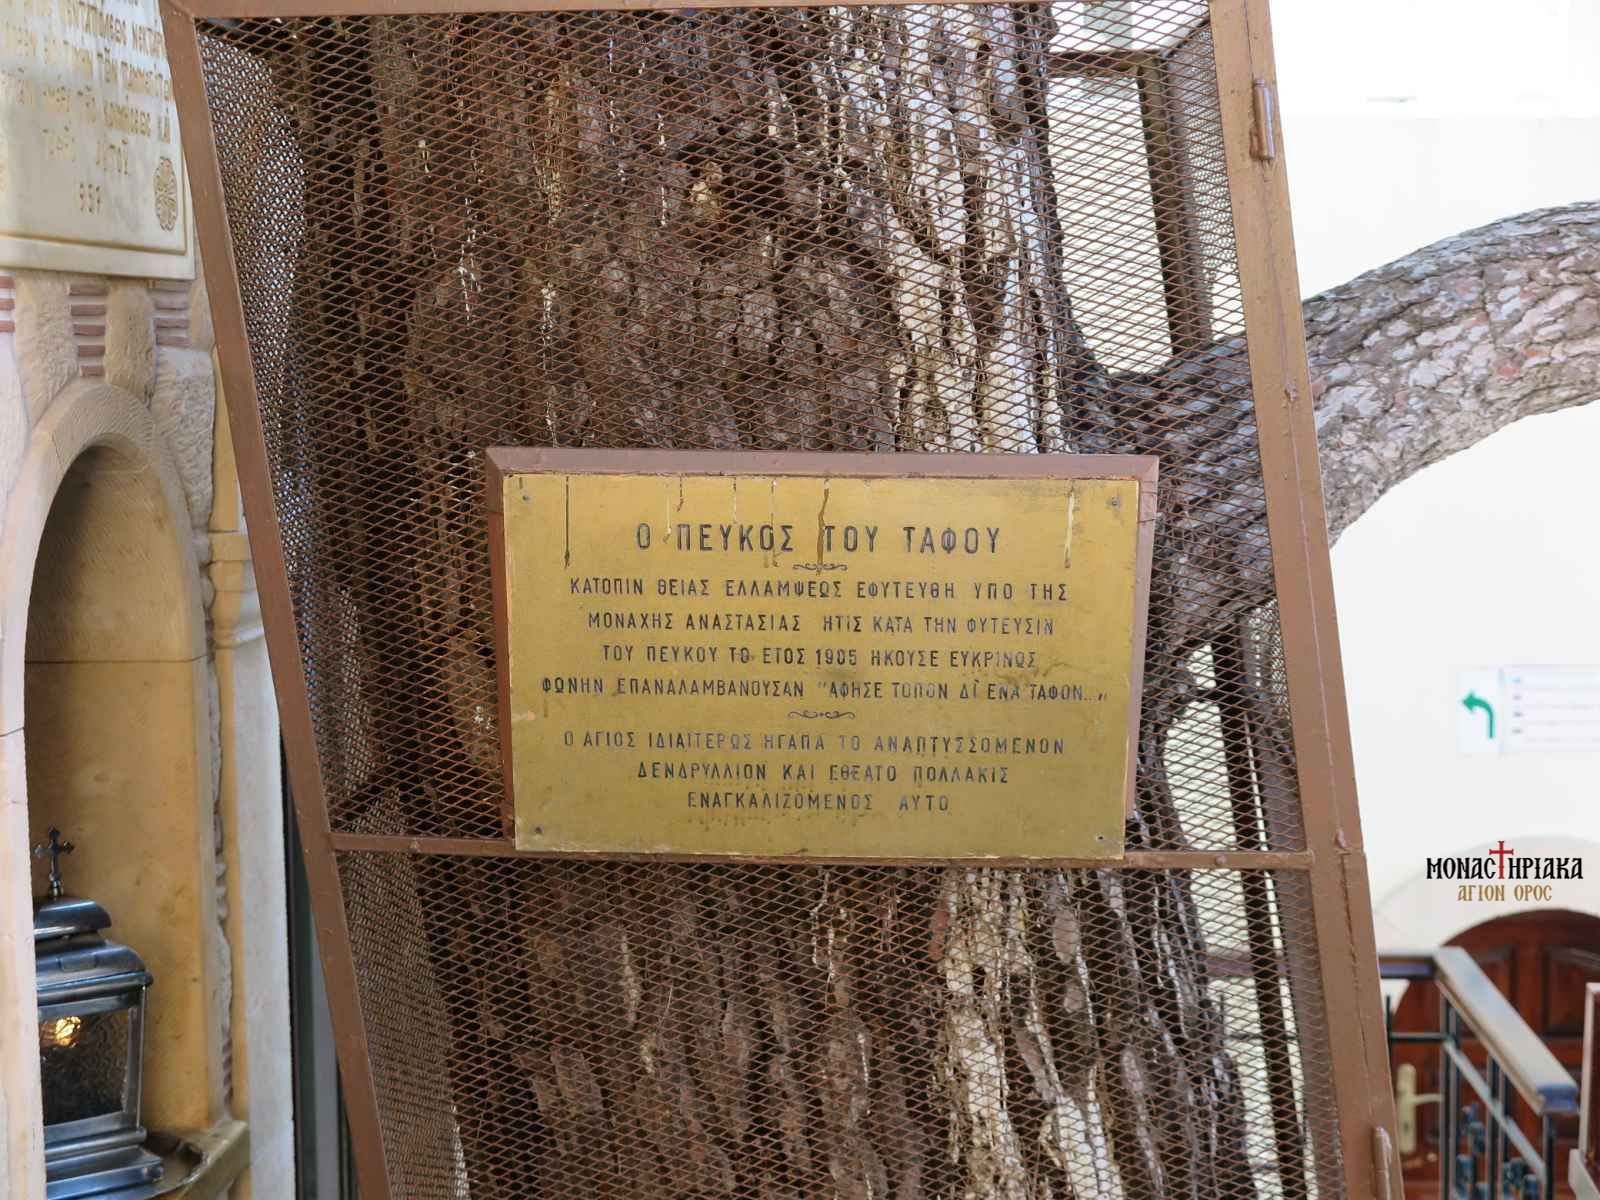 The sign on a tree for Saint Nektarios